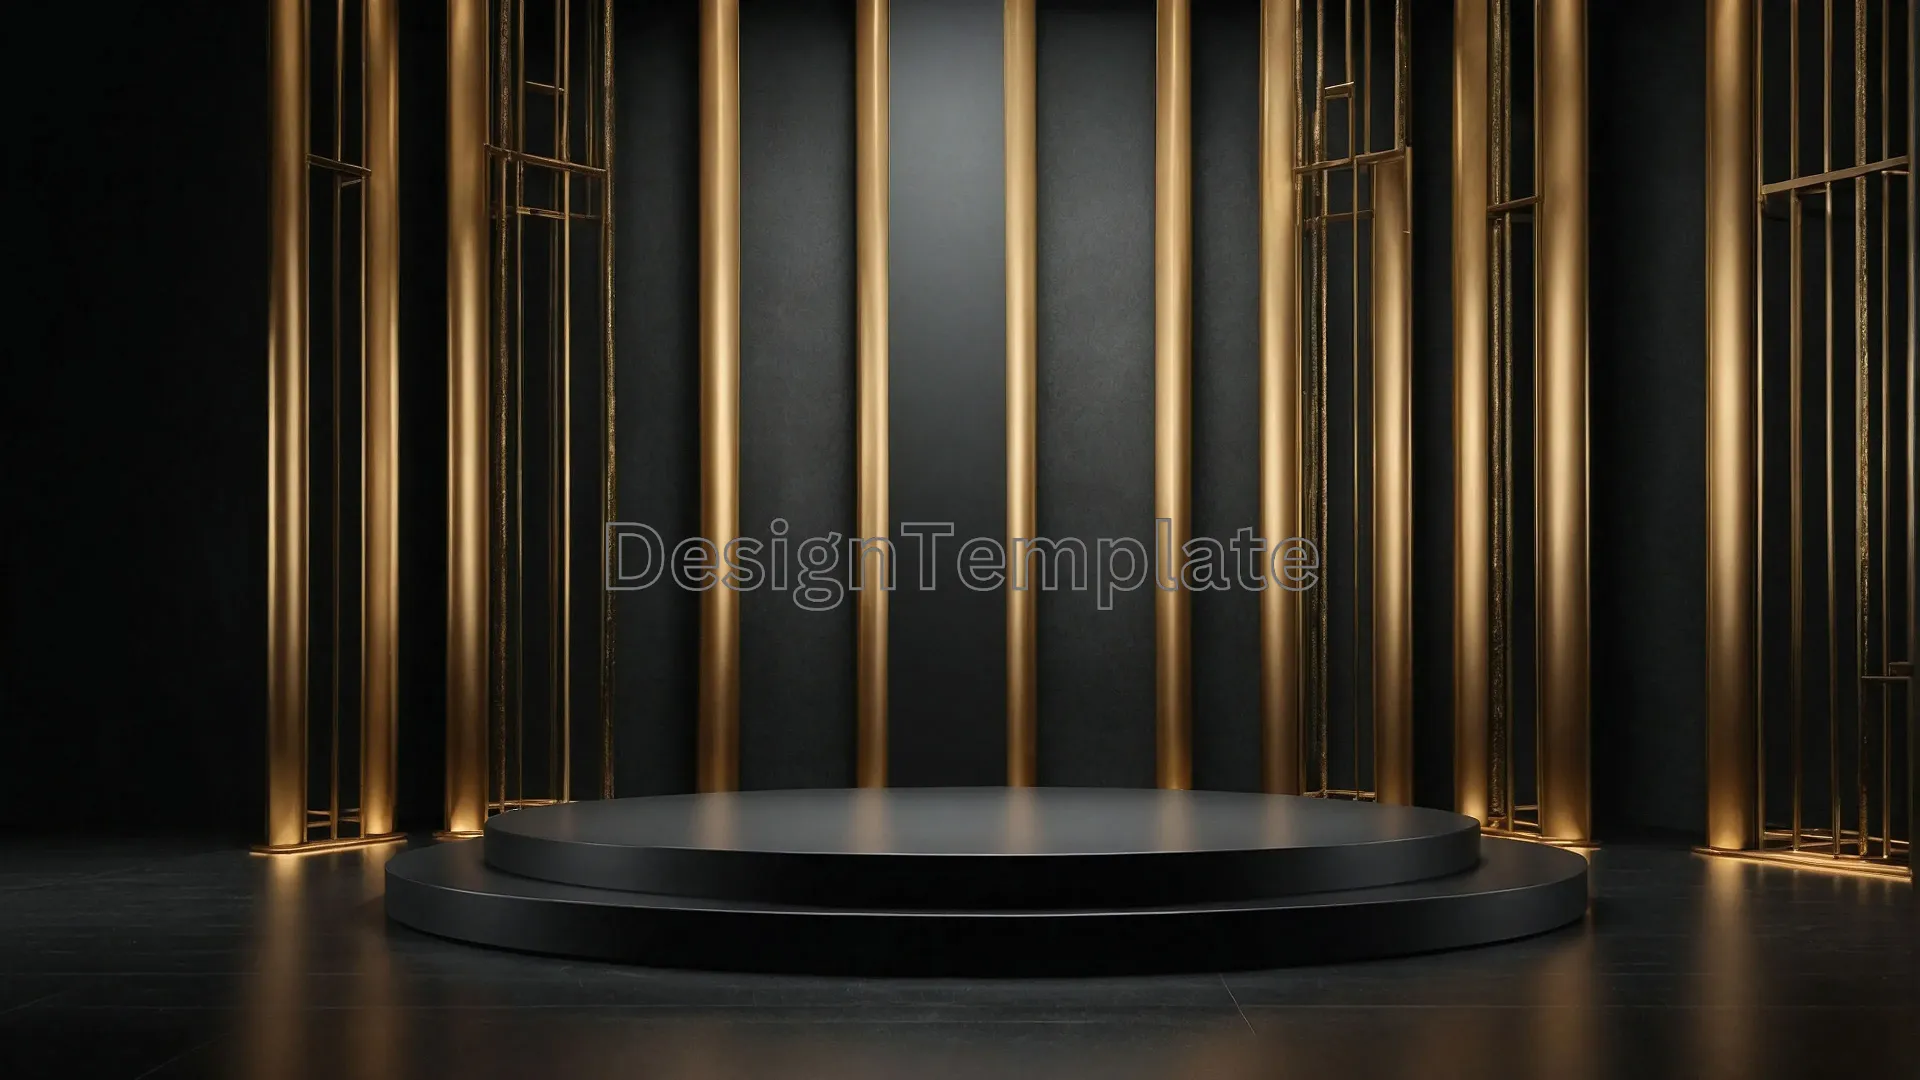 Elegant Award Show Podium with Golden Curtains Image